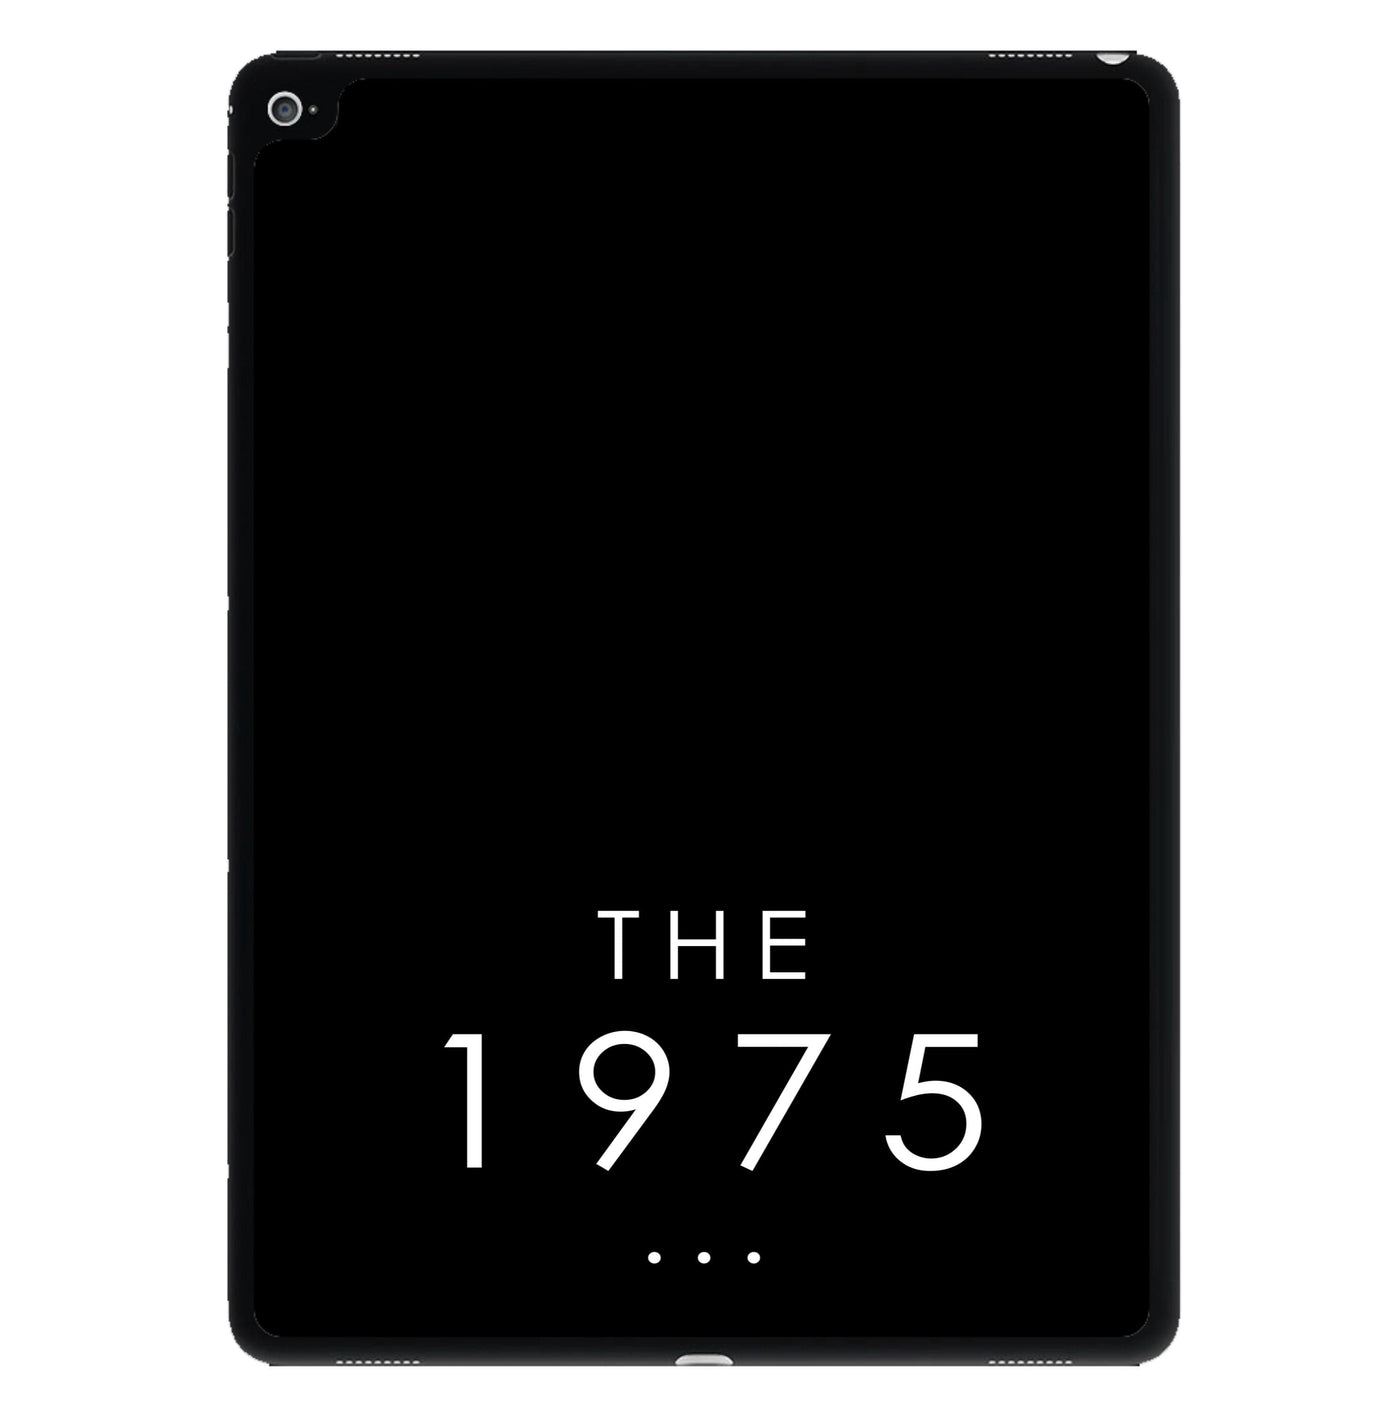 The 1975 iPad Case